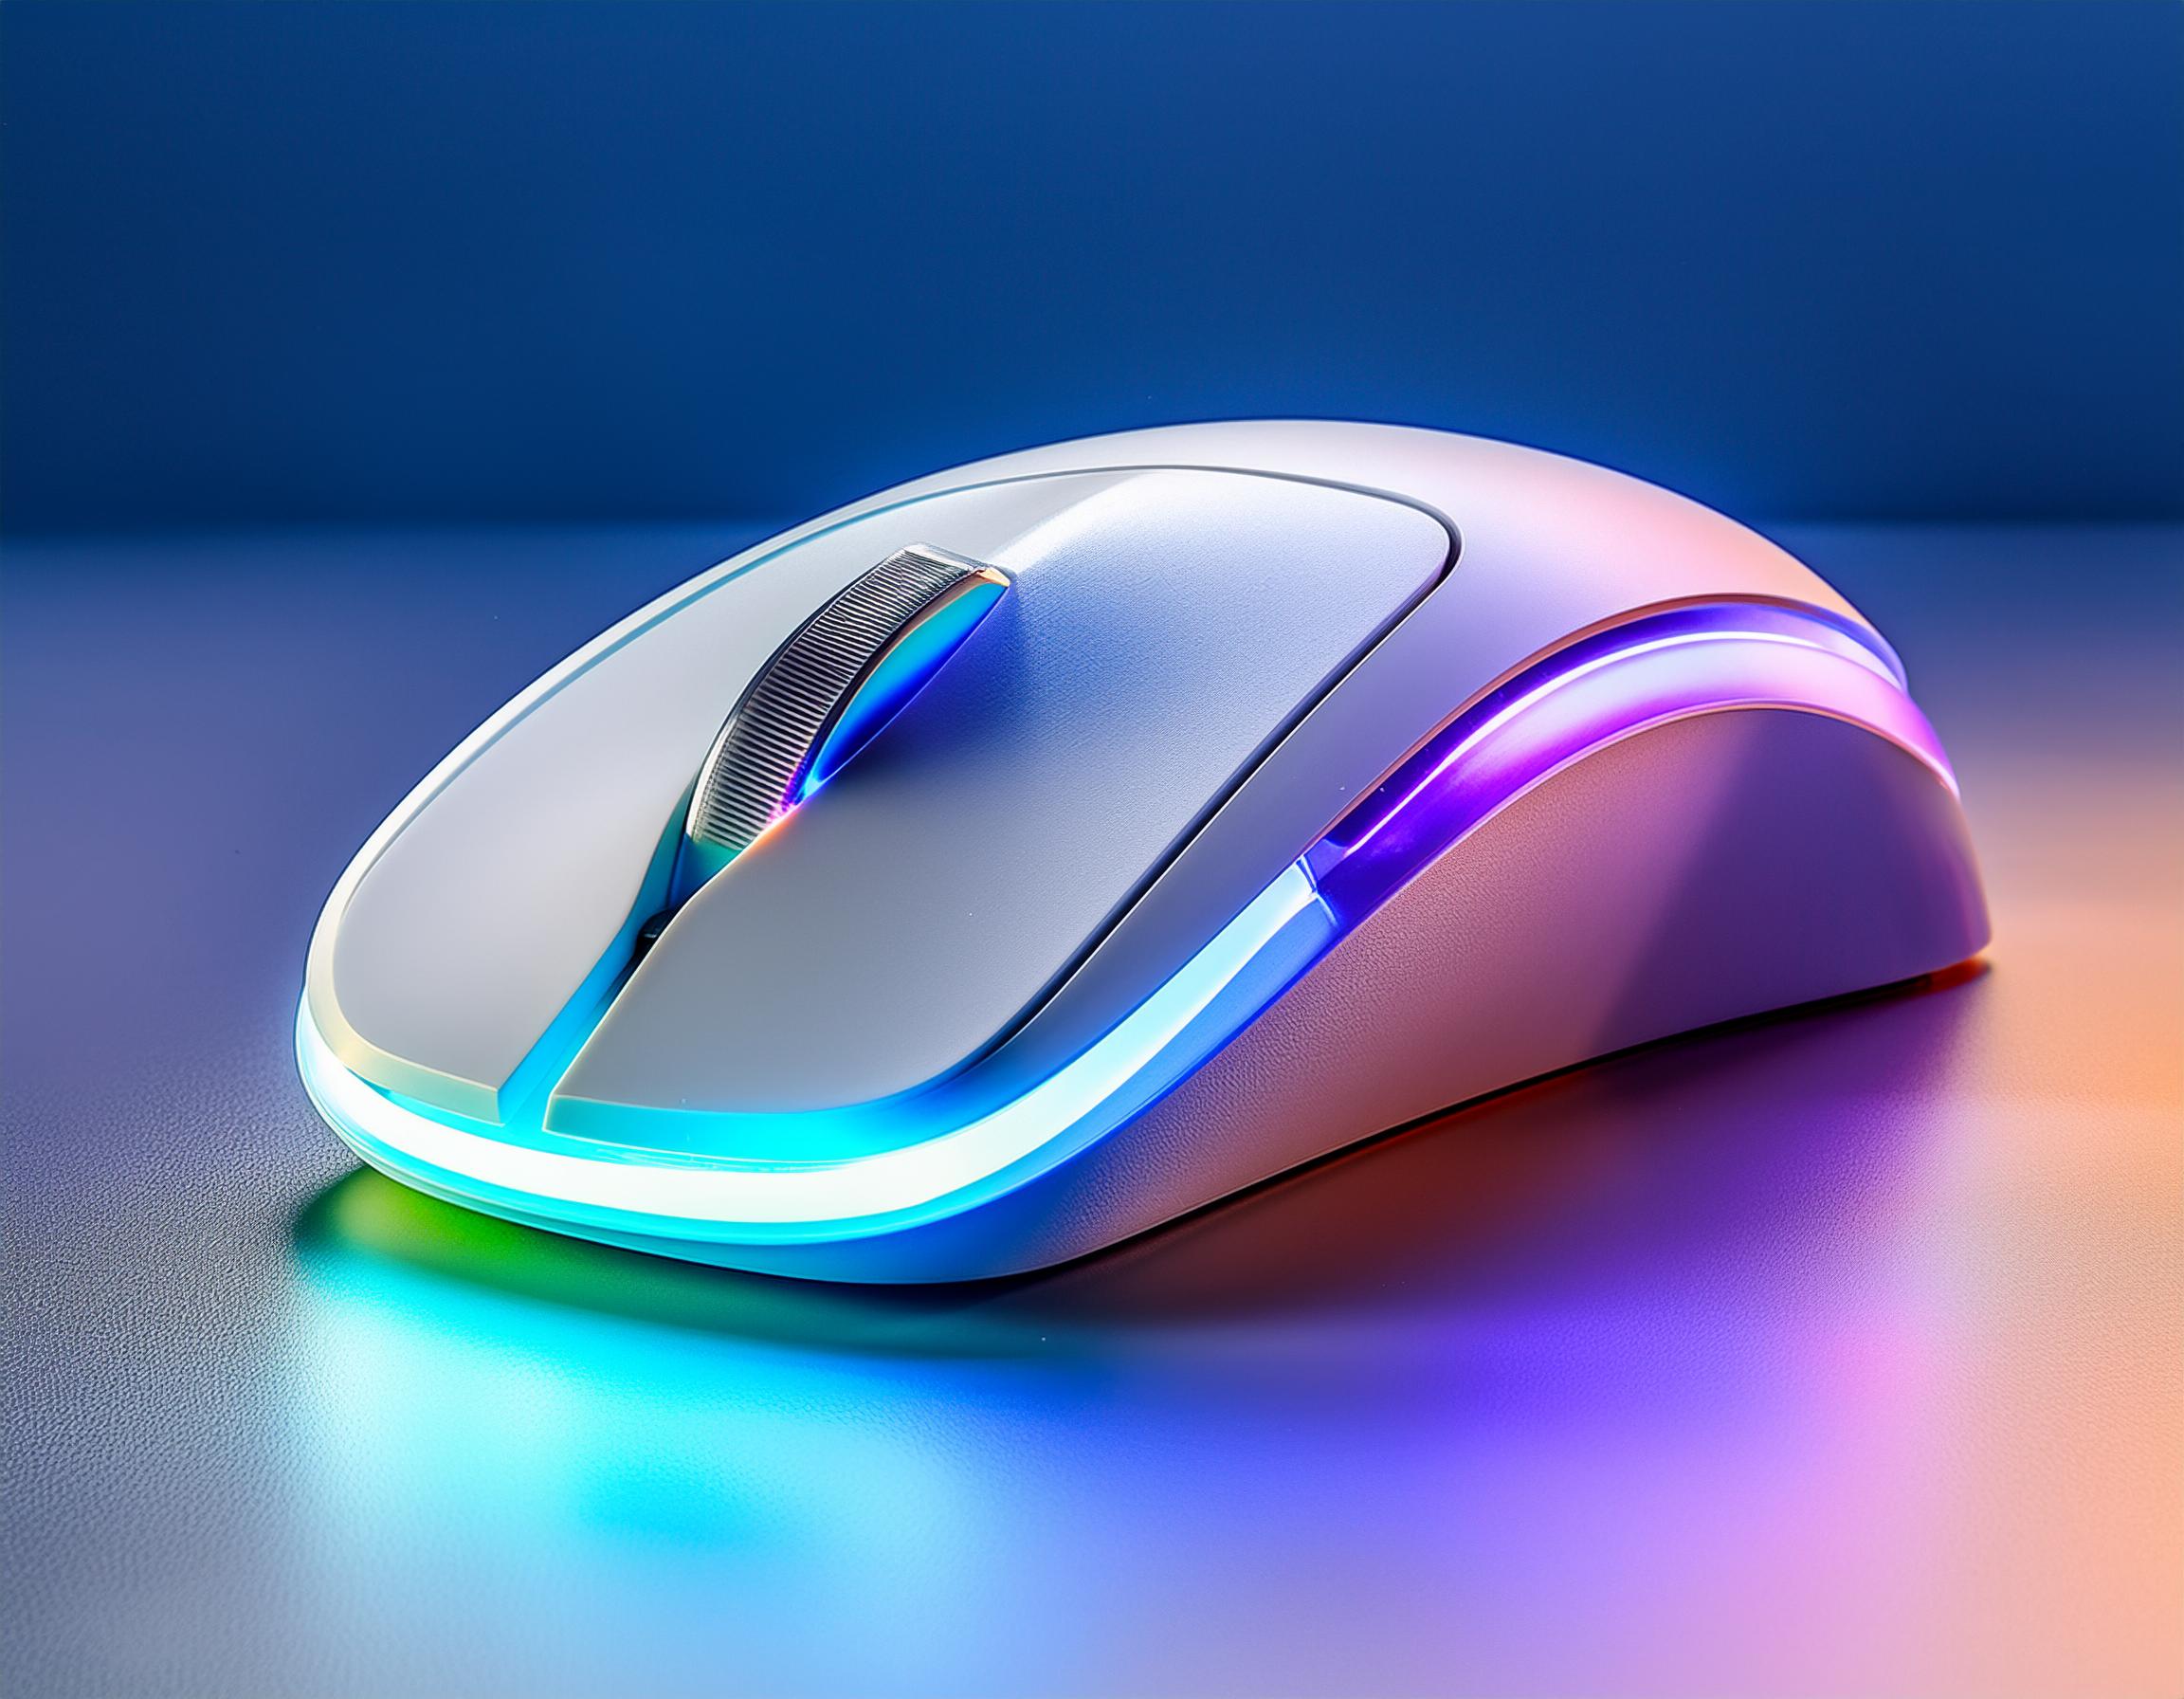 Choosing the Best Gaming Mouse: Top Picks Reviewed